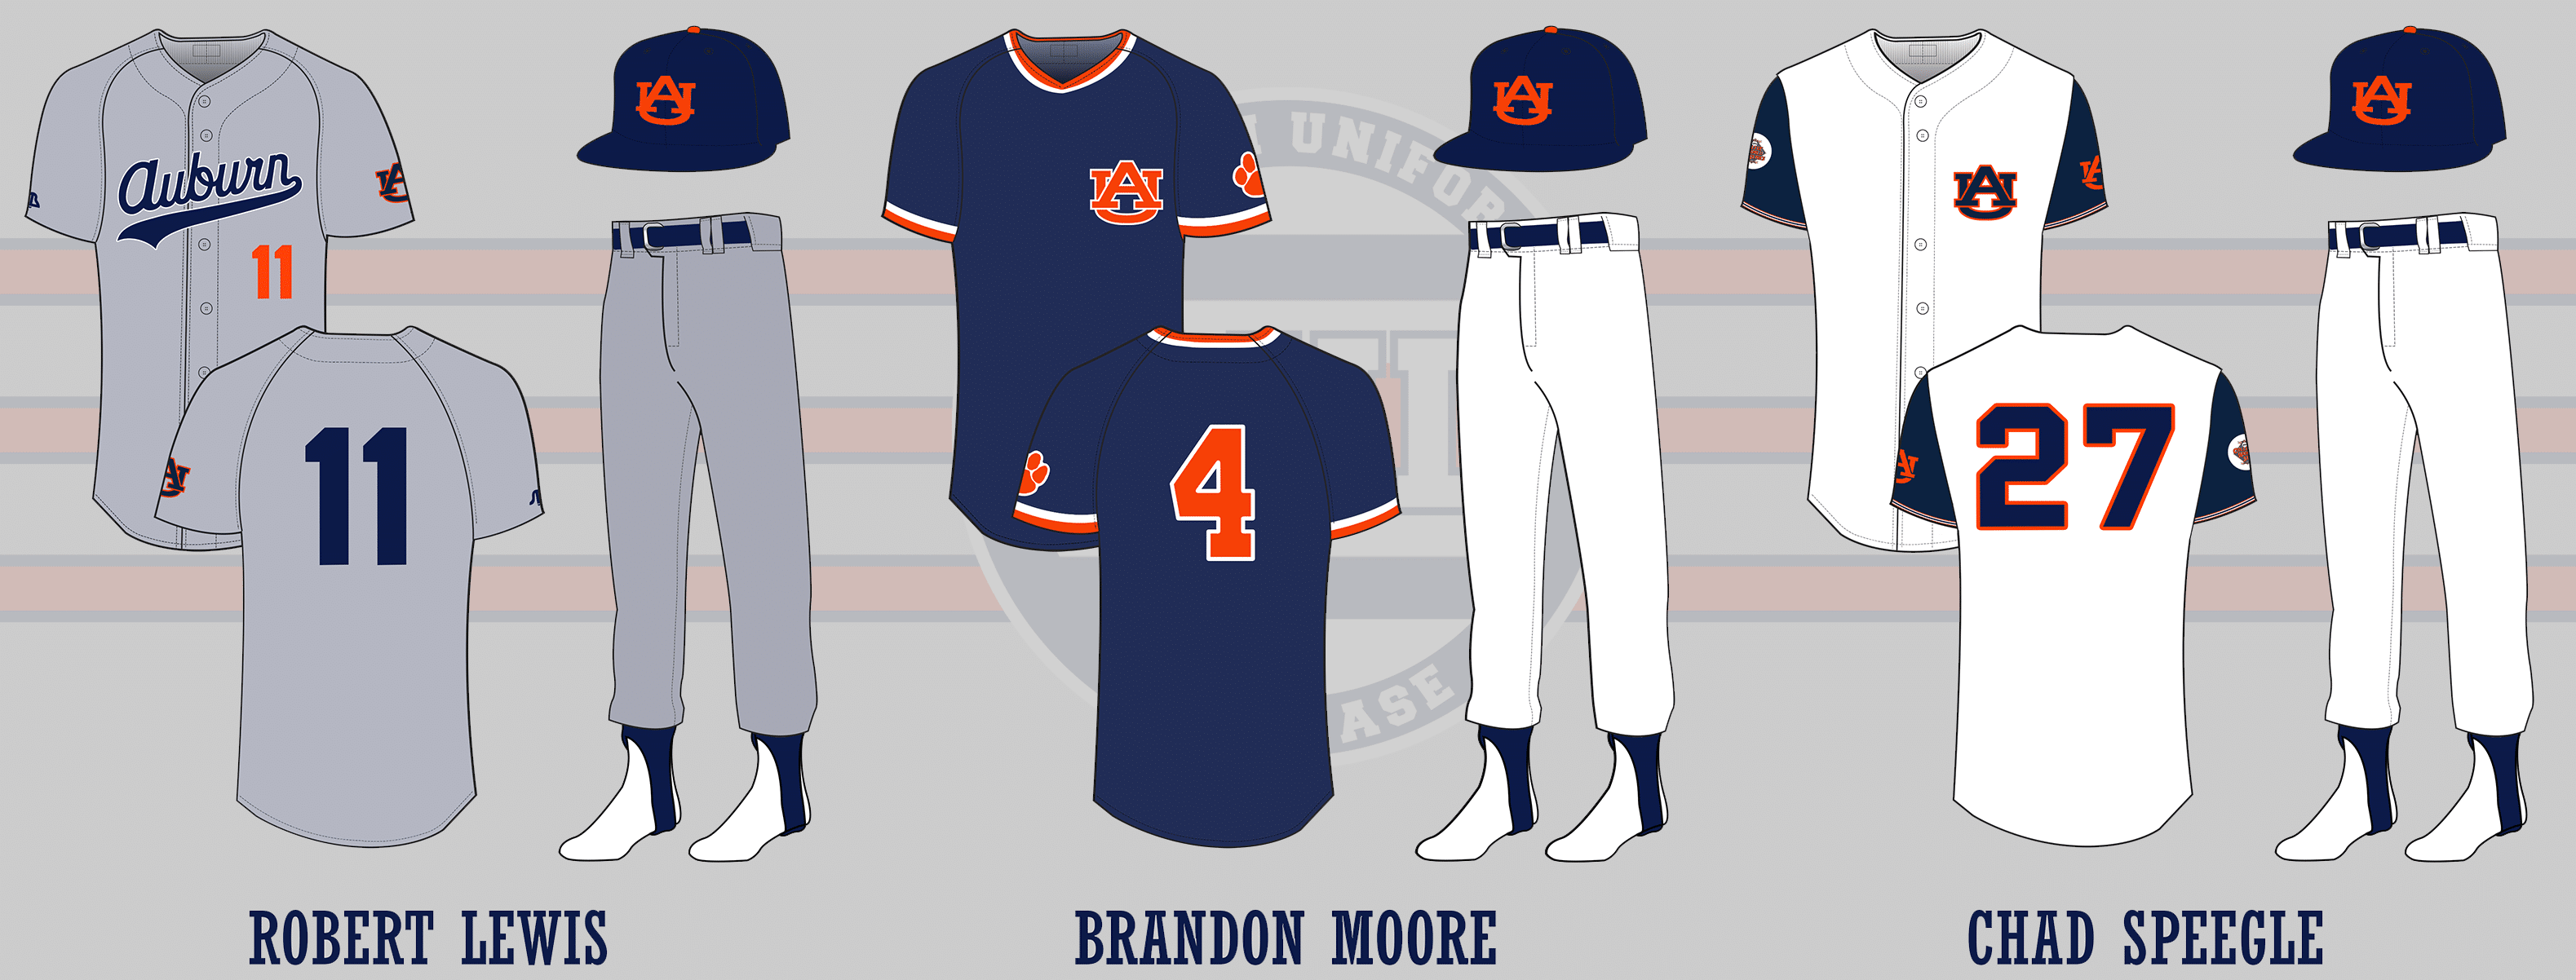 auburn baseball uniforms 2020